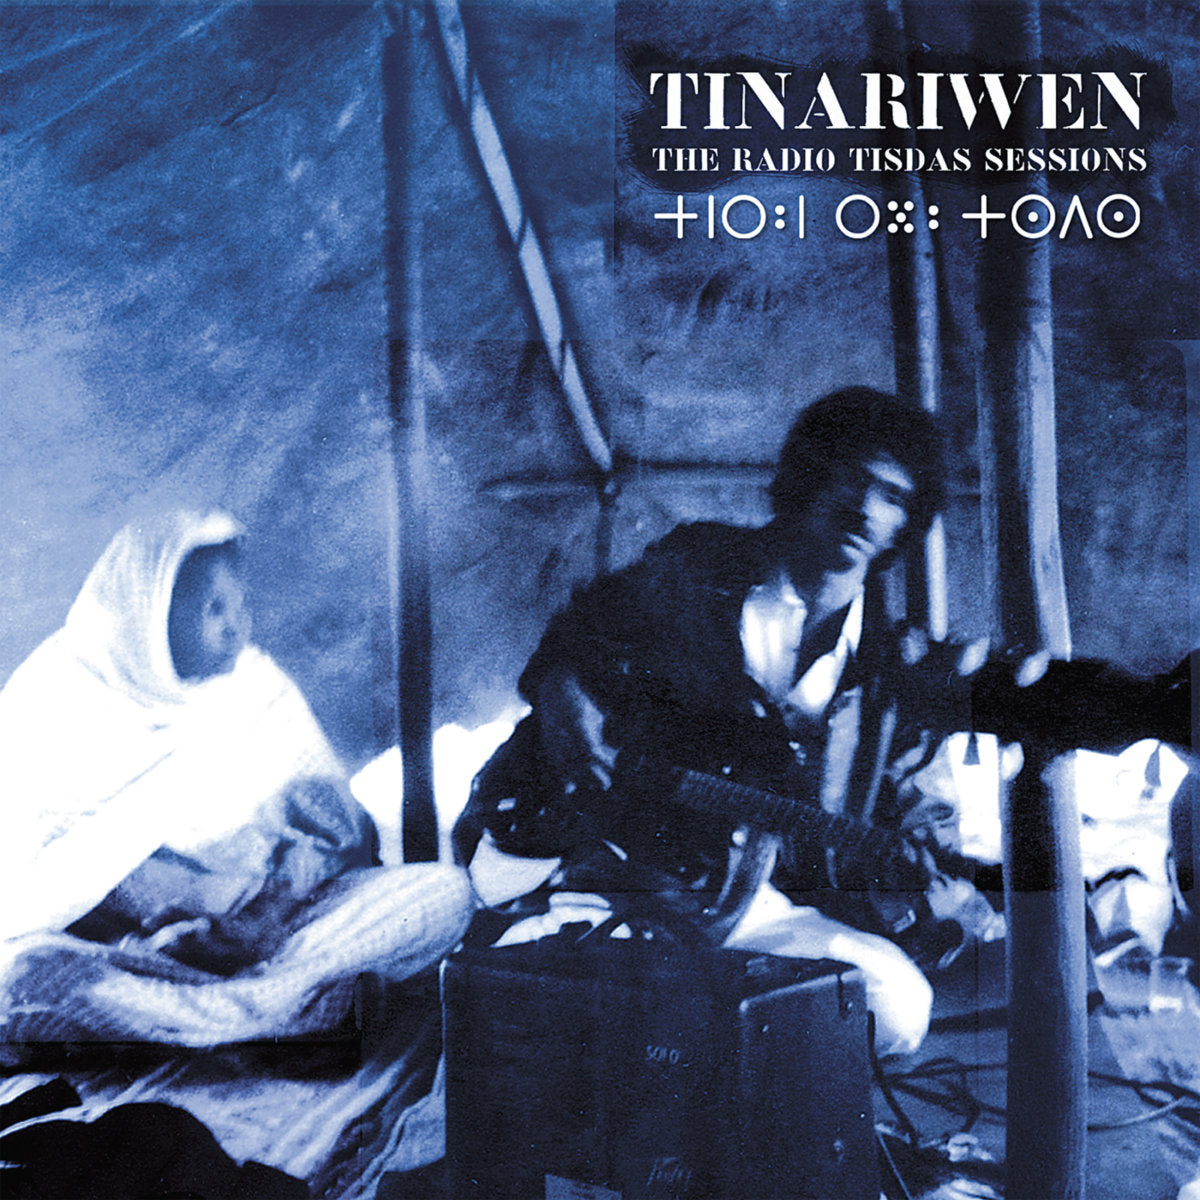 Tinariwen "The Radio Tisdas Sessions" 2xLP Ltd. Edition White Vinyl + Download [Wedge 2021 Reissue]